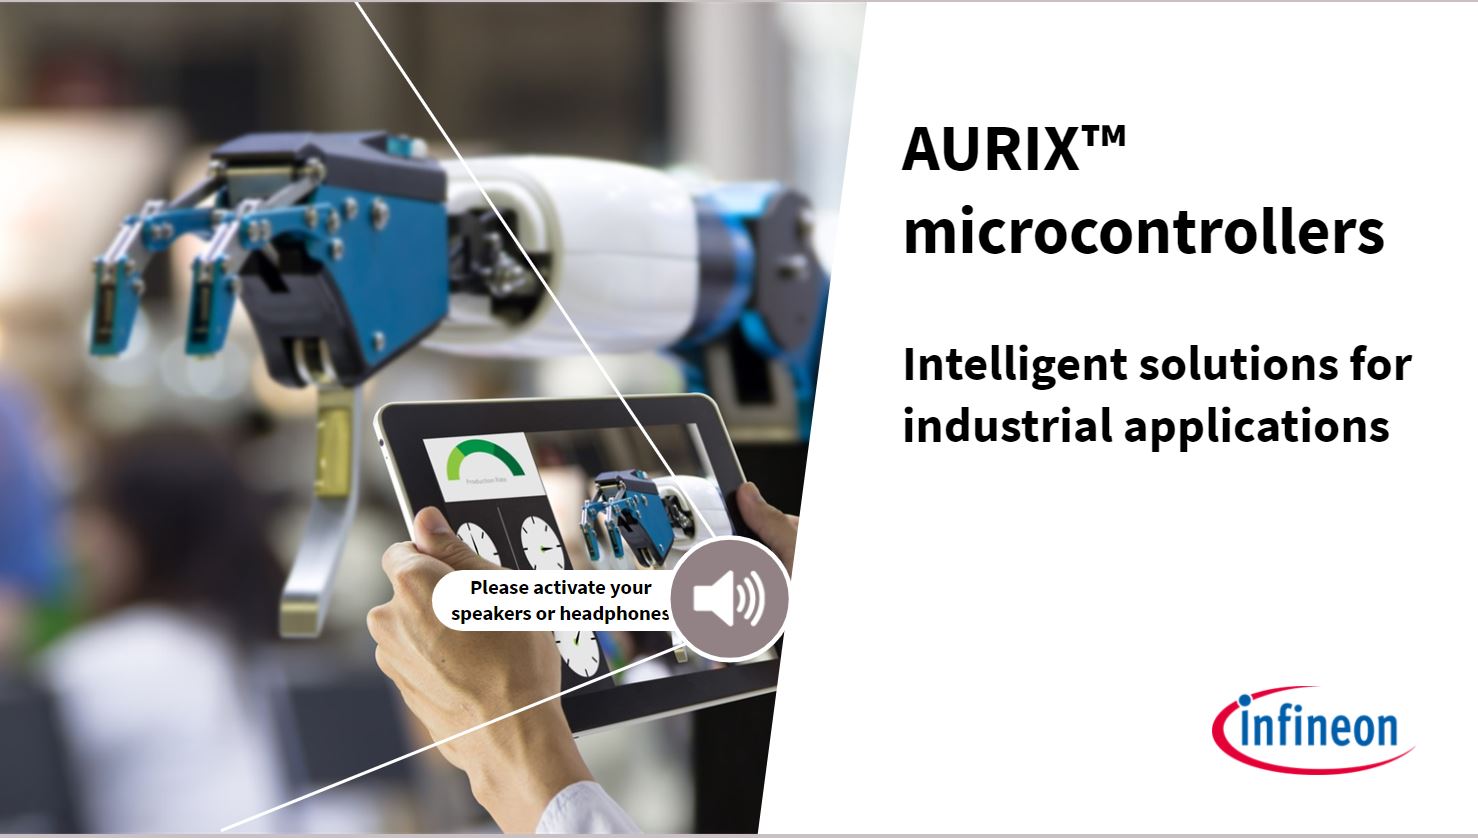 Aurix microcontrollers